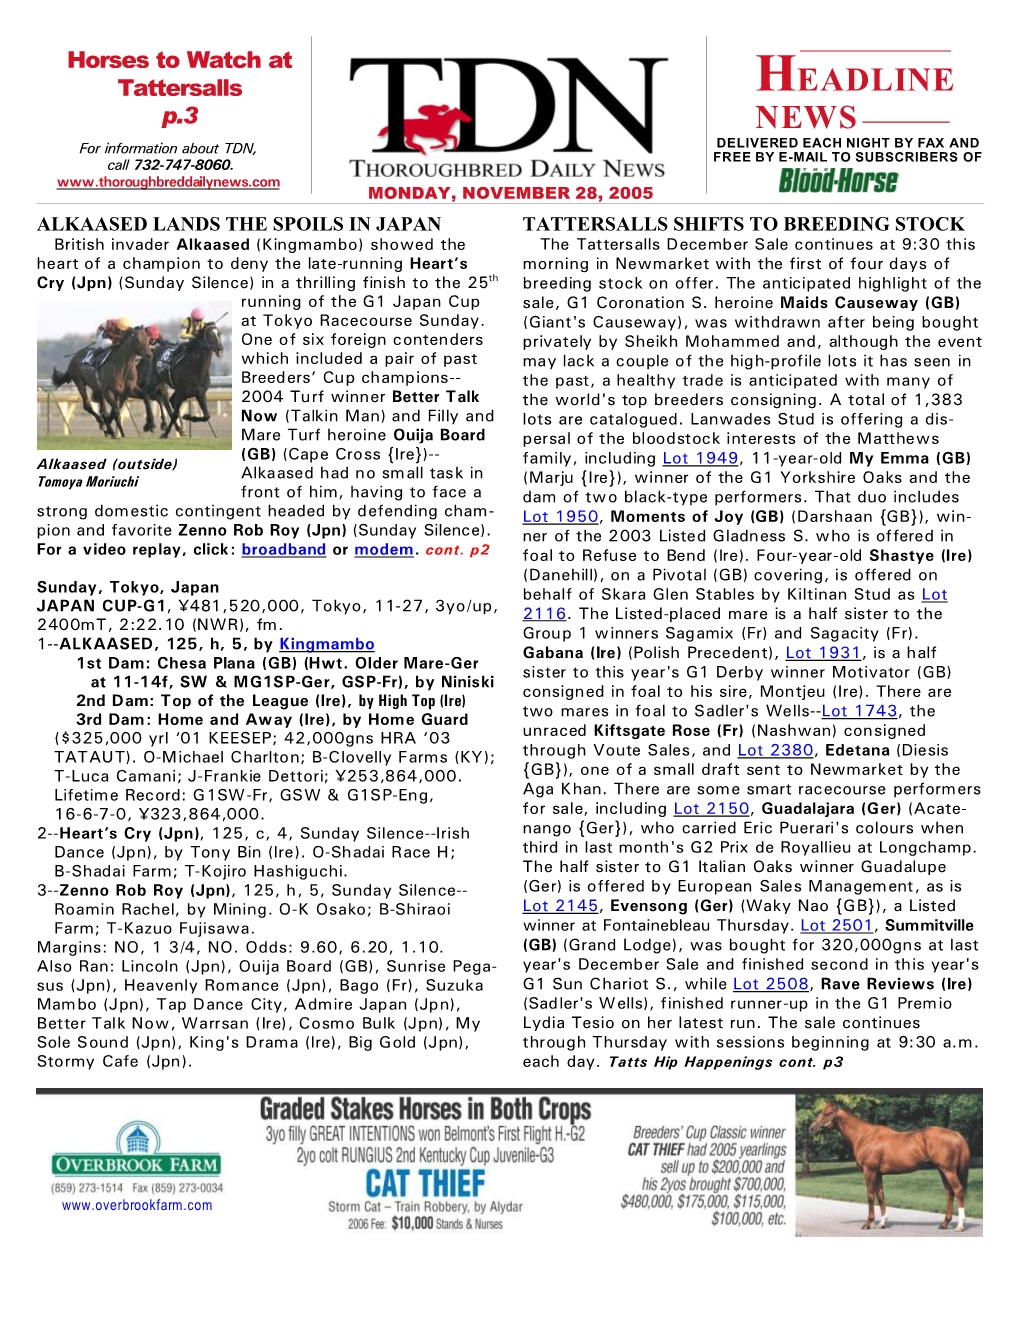 HEADLINE NEWS • 11/28/05 • PAGE 2 of 3